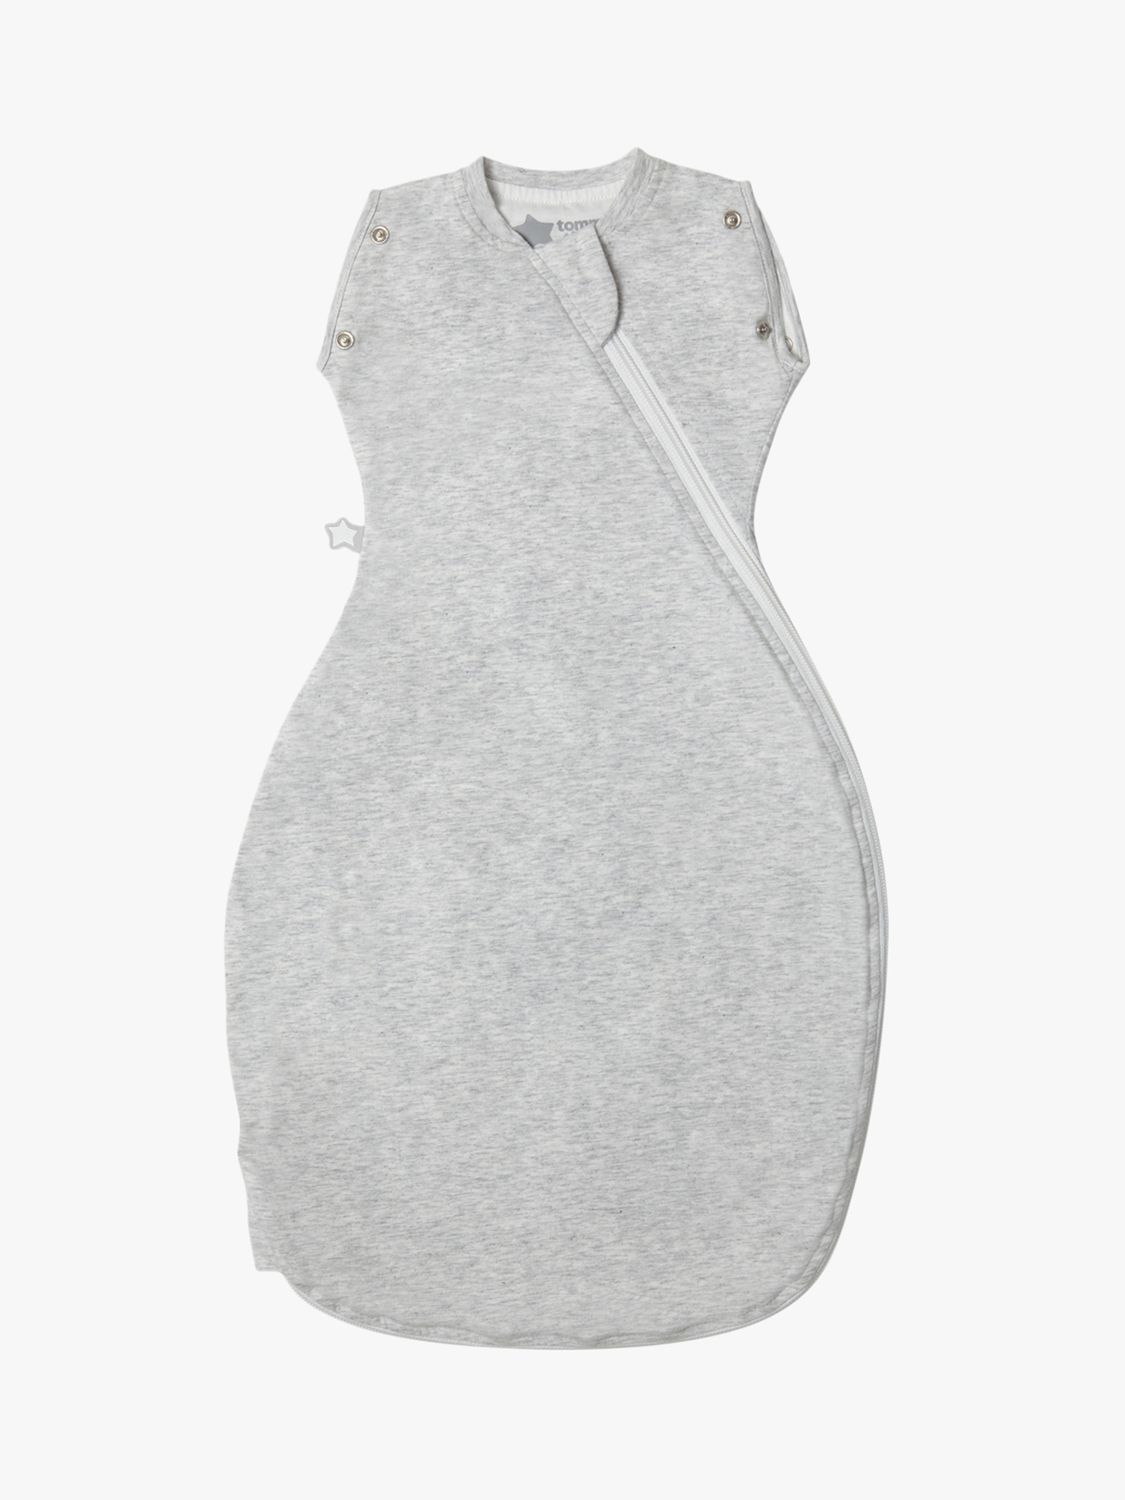 Tommee Tippee The Original Grobag Newborn Snuggle Baby Sleeping Bag, 1.0 Tog, Grey Marl